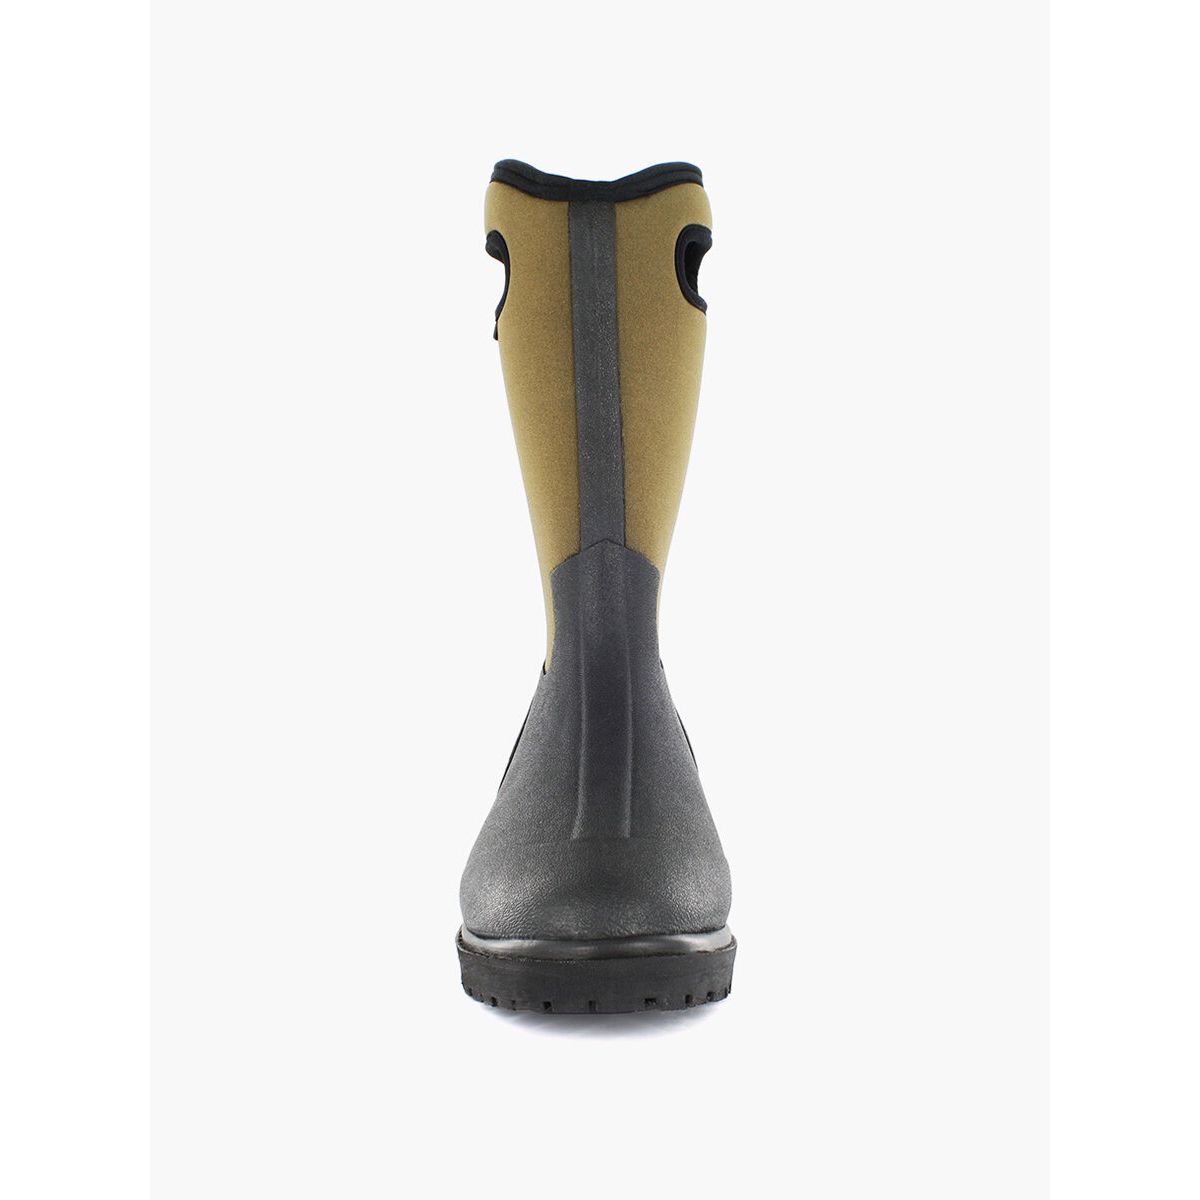 BOGS Men's Roper Insulated Waterproof Soft Toe Work Boots Black & Brown - 69162-963 - BLACK, 13